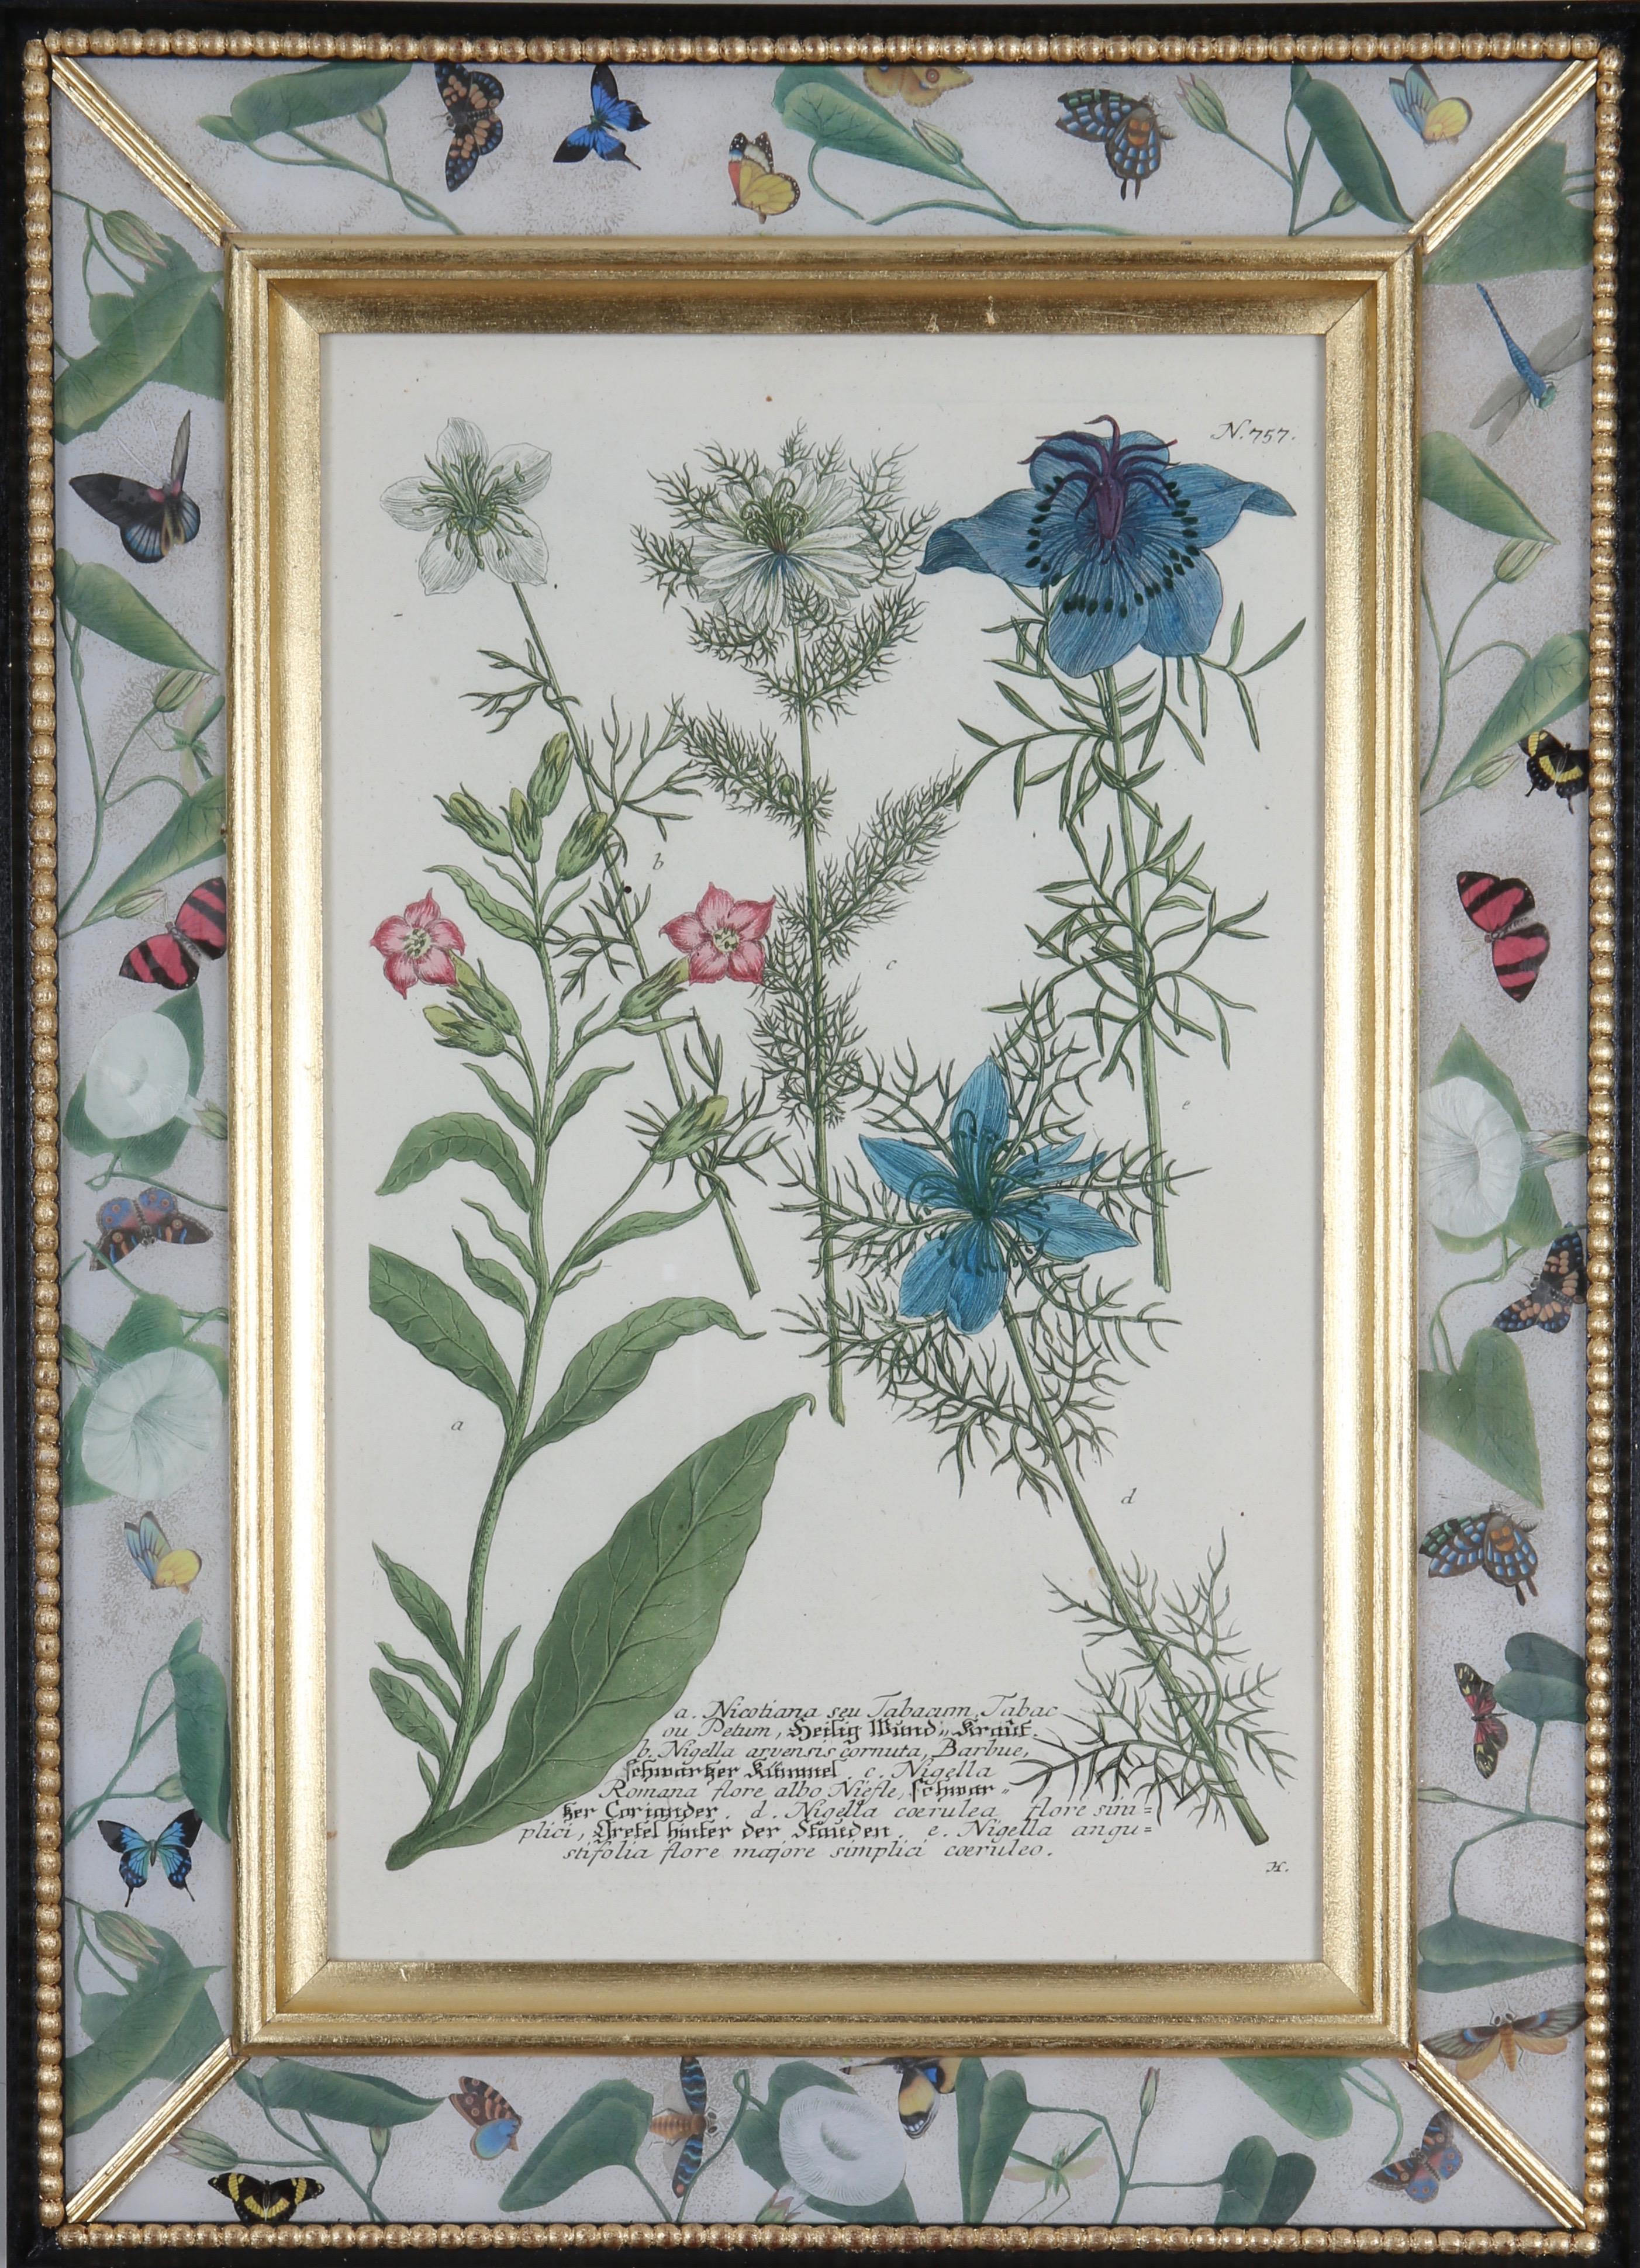 18th century botanical engraving in decalcomania frame. - Print by Johann Wilhelm Weinmann